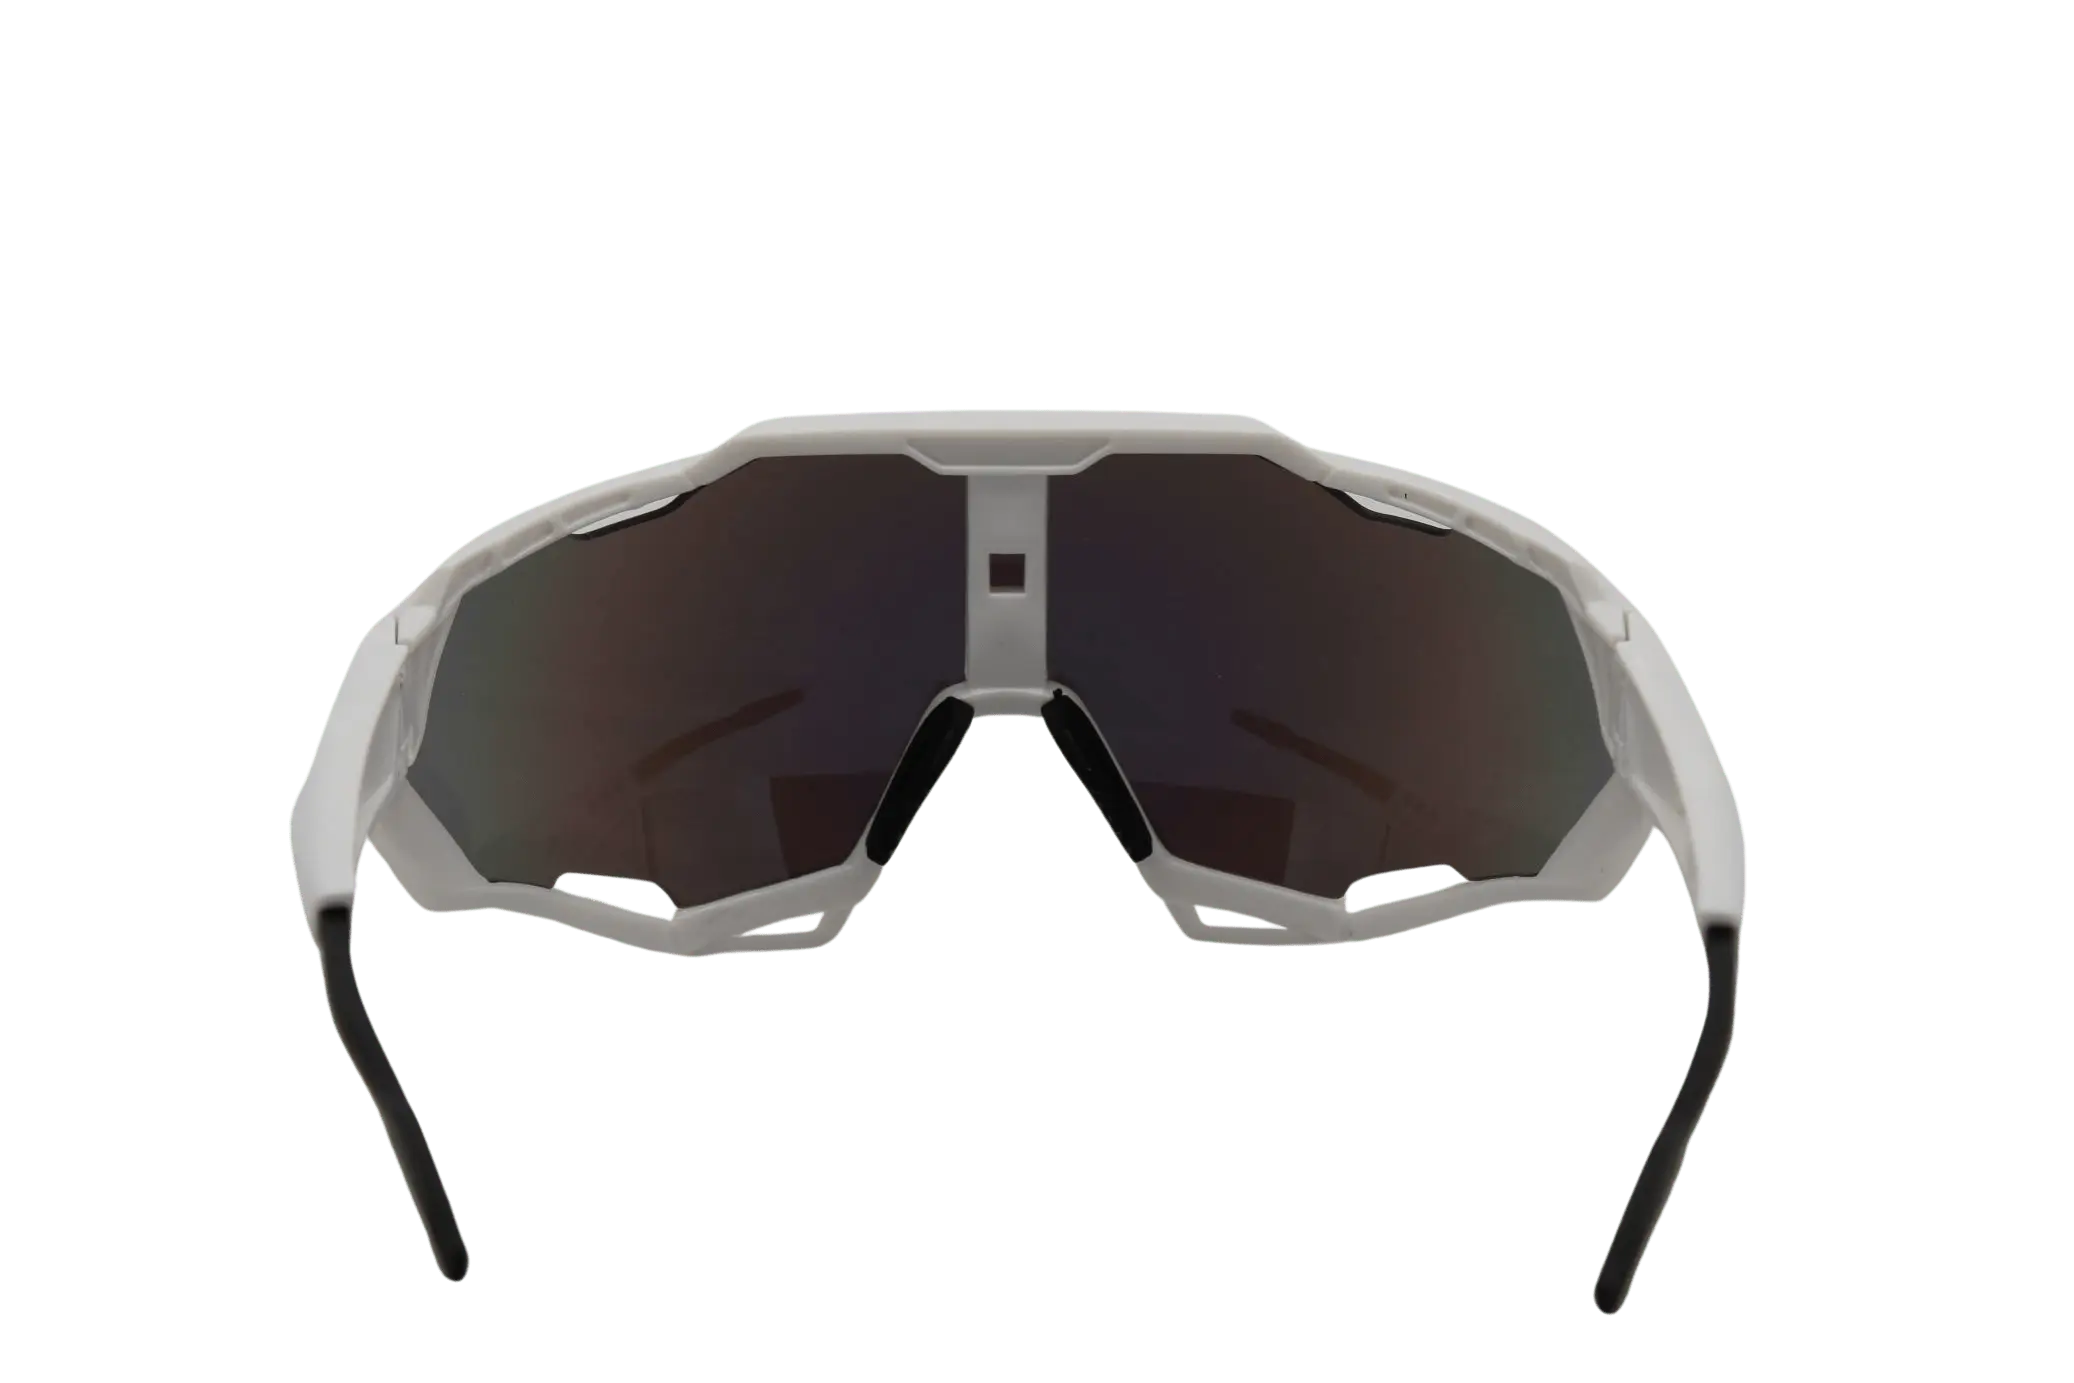 Arktisglanz Raver Ski-Brille